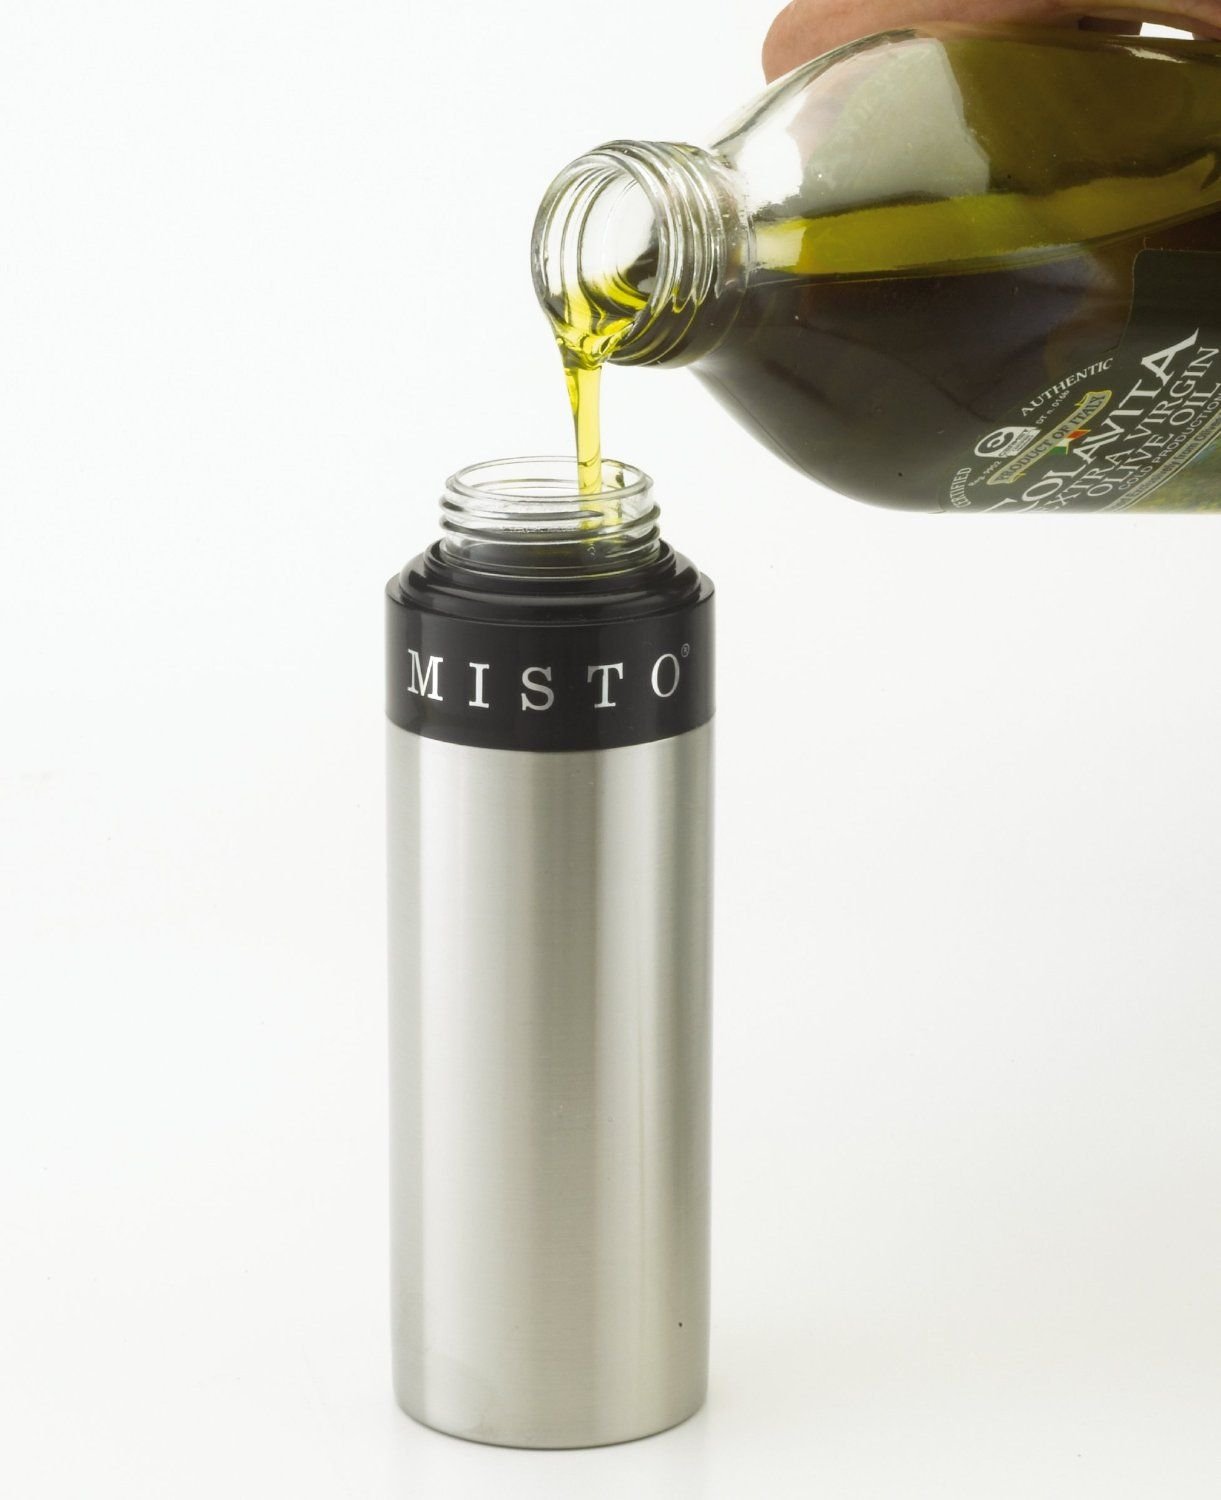 Misto Brushed Aluminum Gourmet Olive Oil Sprayer - image 4 of 5